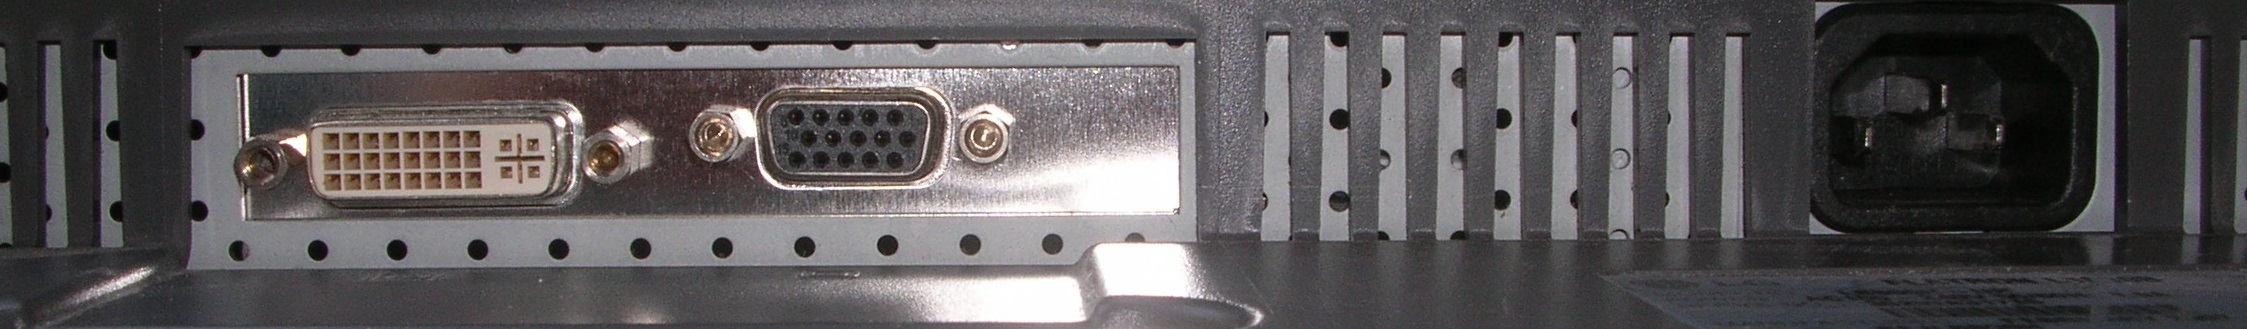 LG FLATRON L1810B 18.1" LCD MONITOR - Click Image to Close